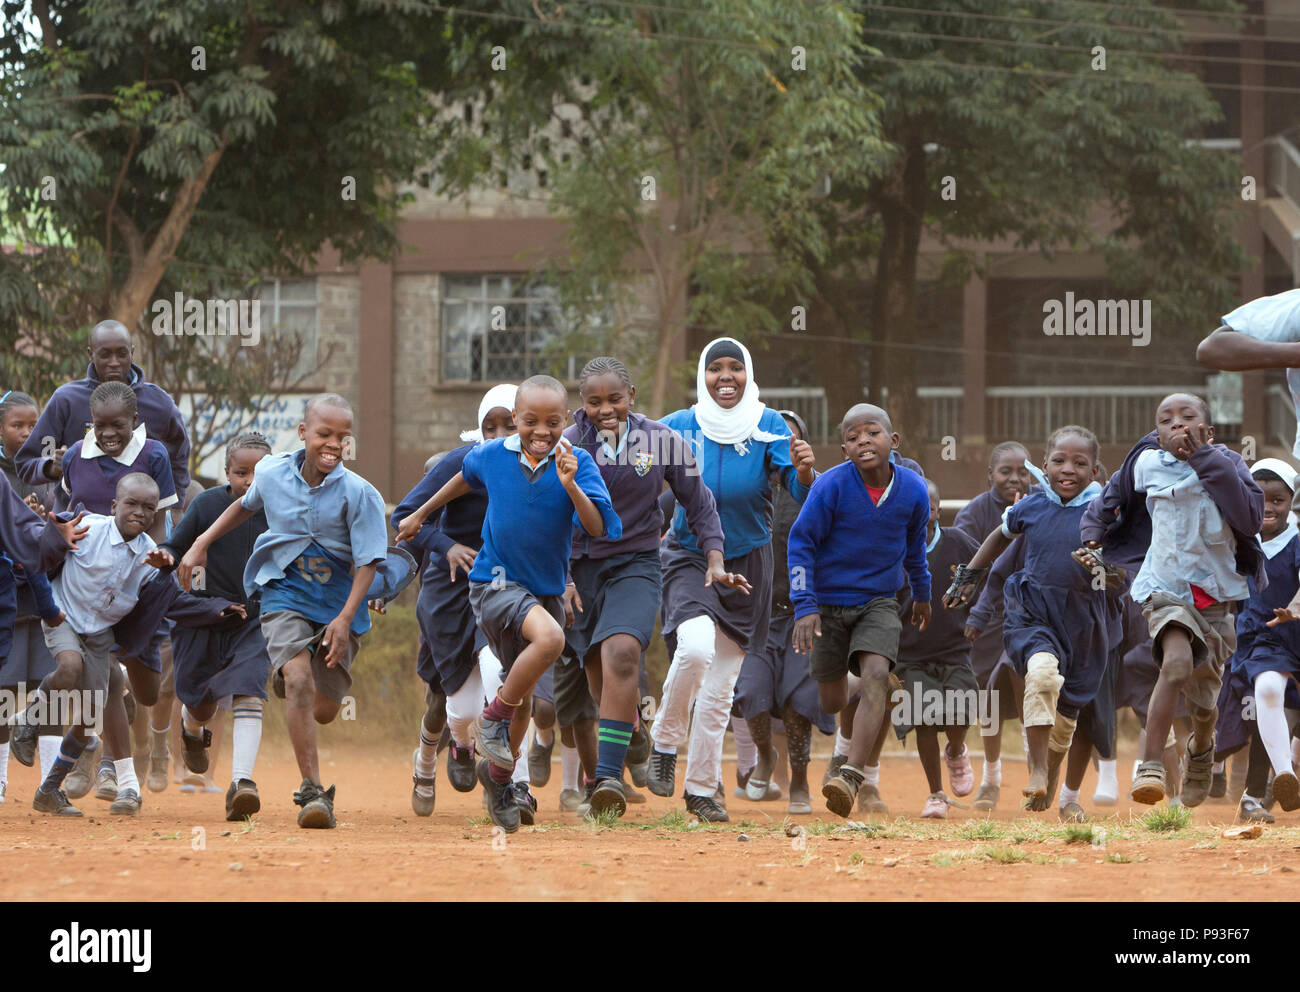 Nairobi, Kenya - Students in school uniforms compete in the schoolyard of St. John's Community Center Pumwani. Stock Photo